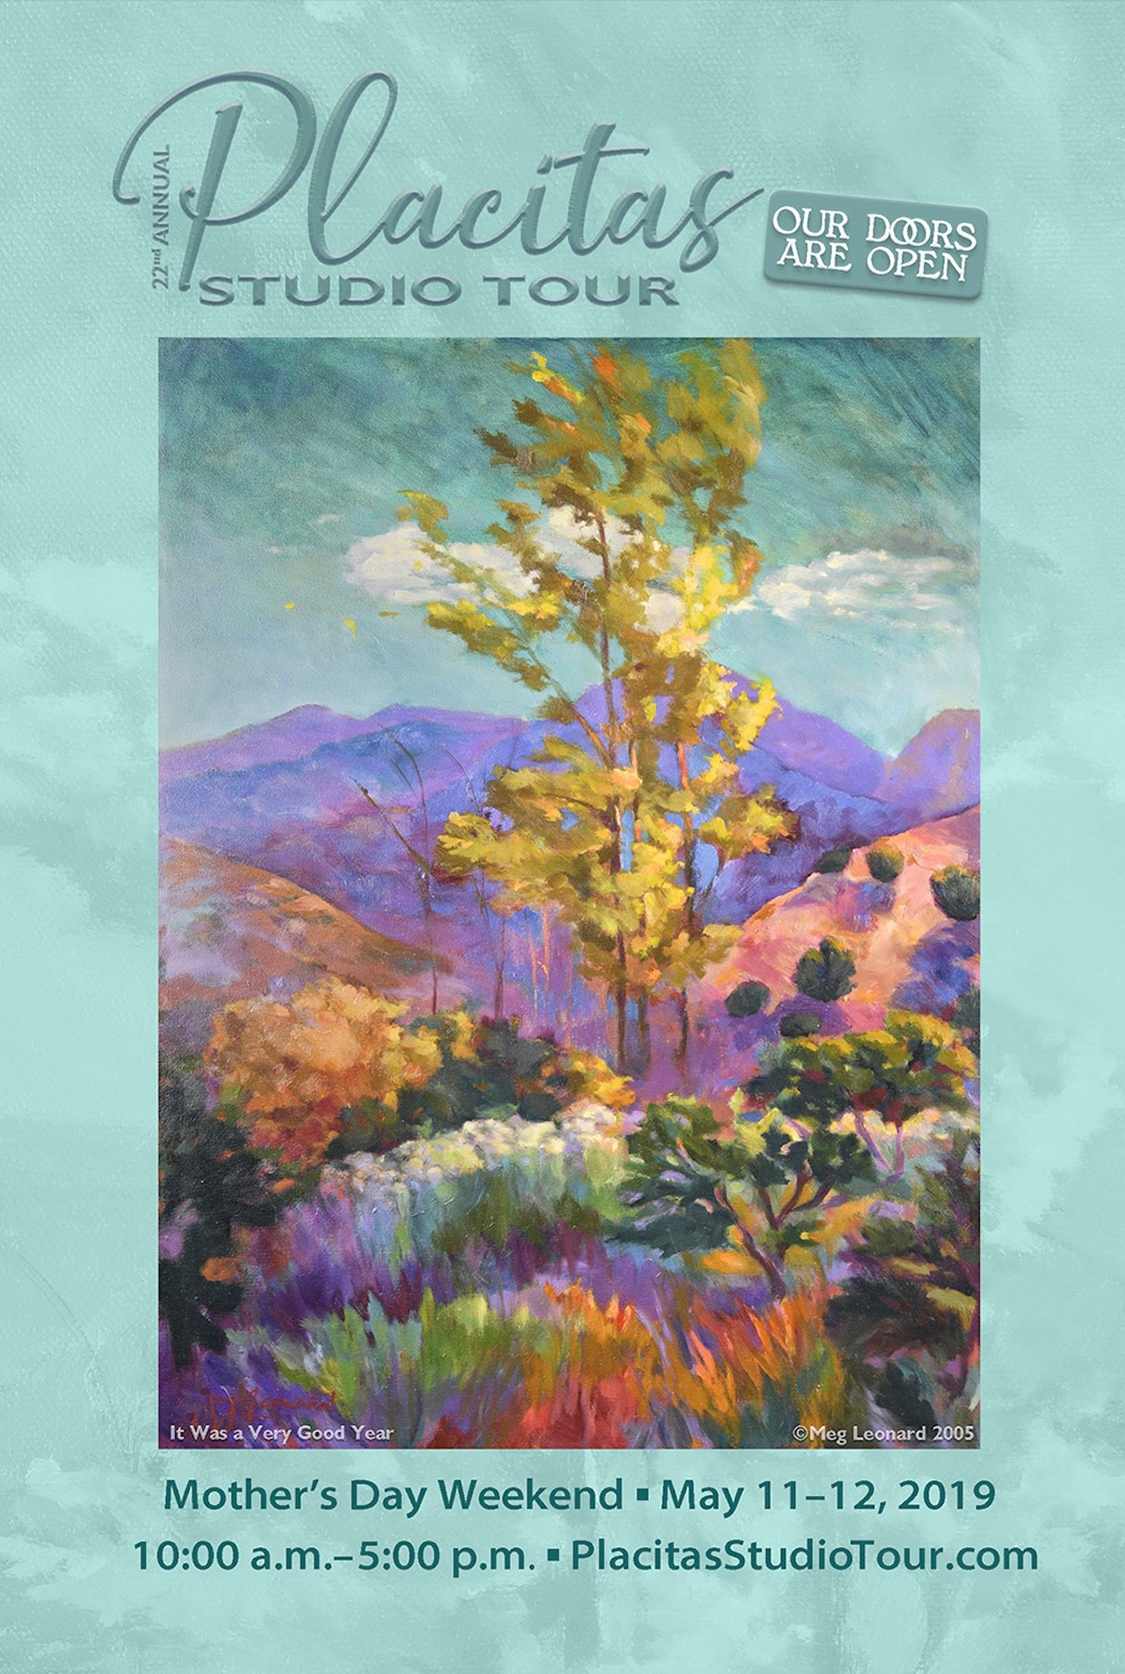 Placitas Studio Tour Art Events New Mexico & Studio Tour Guide